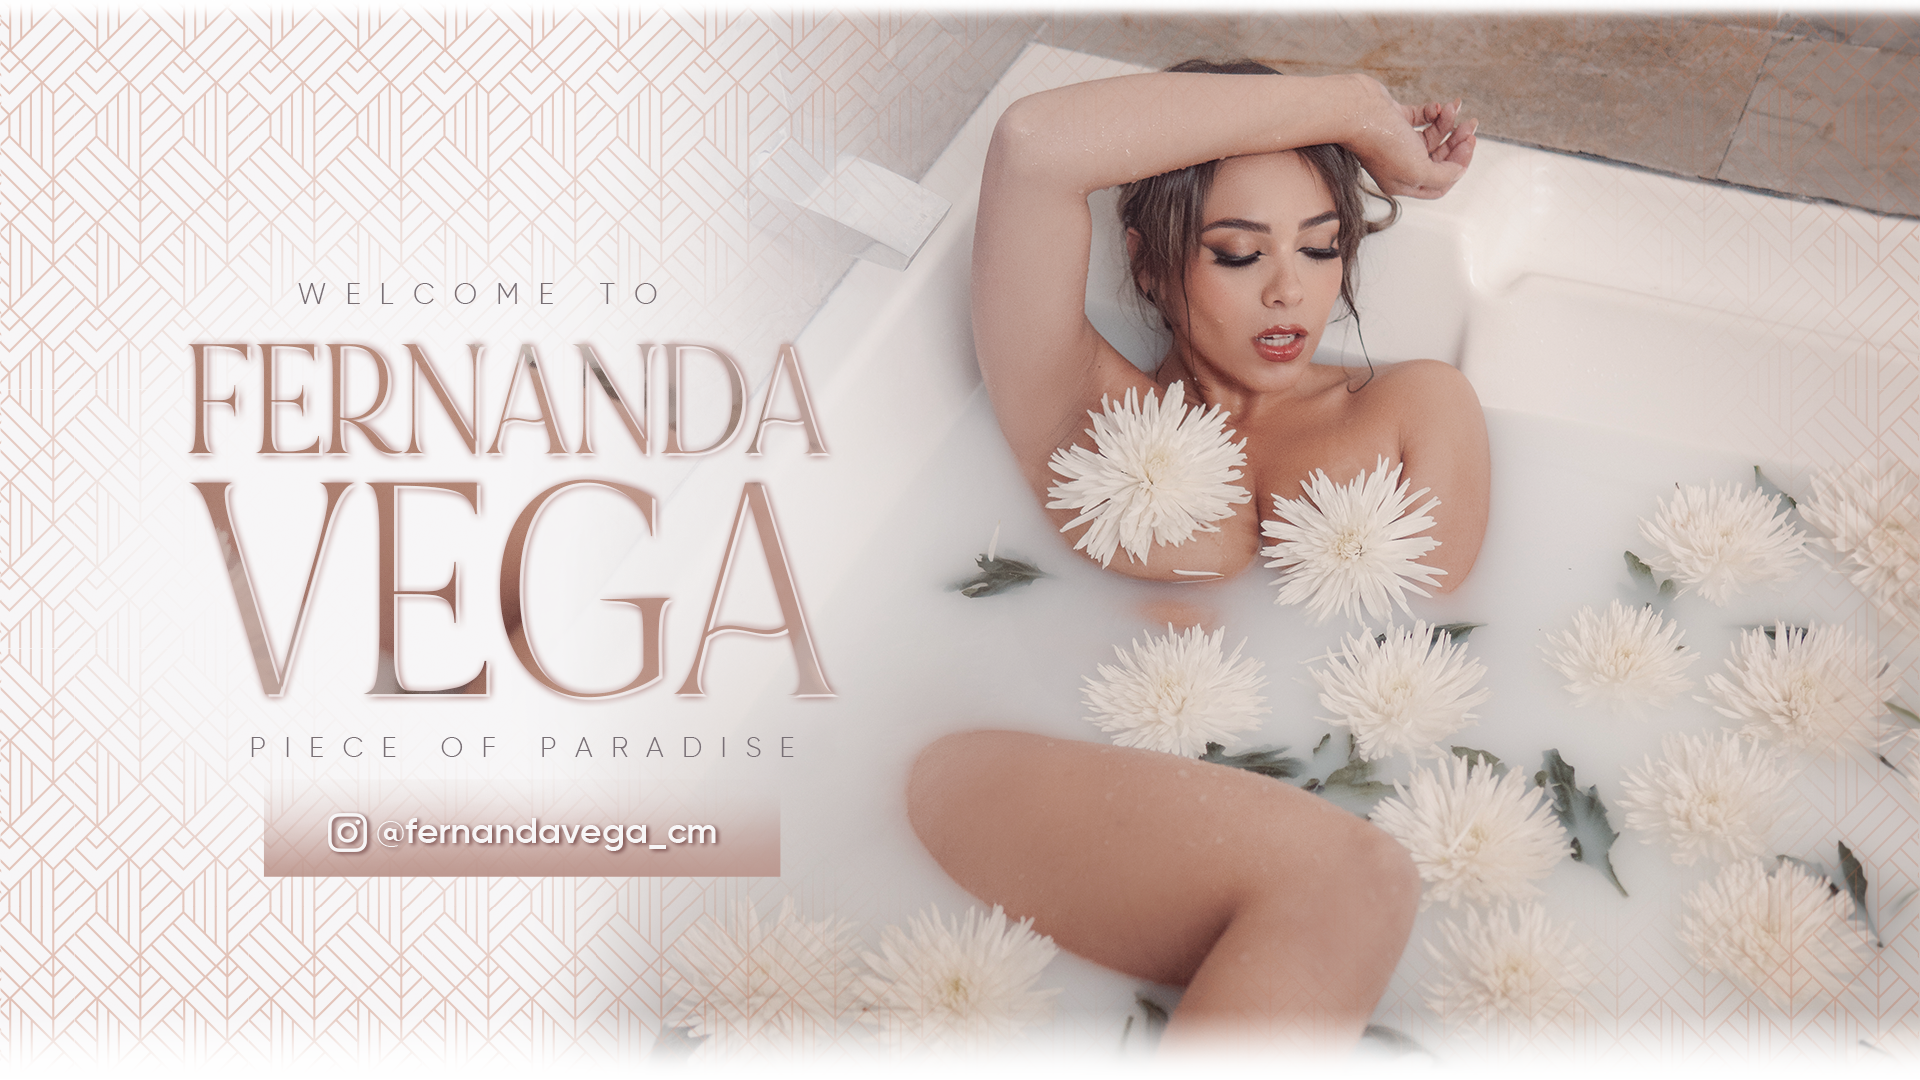 FernandaVega Welcome! image: 1